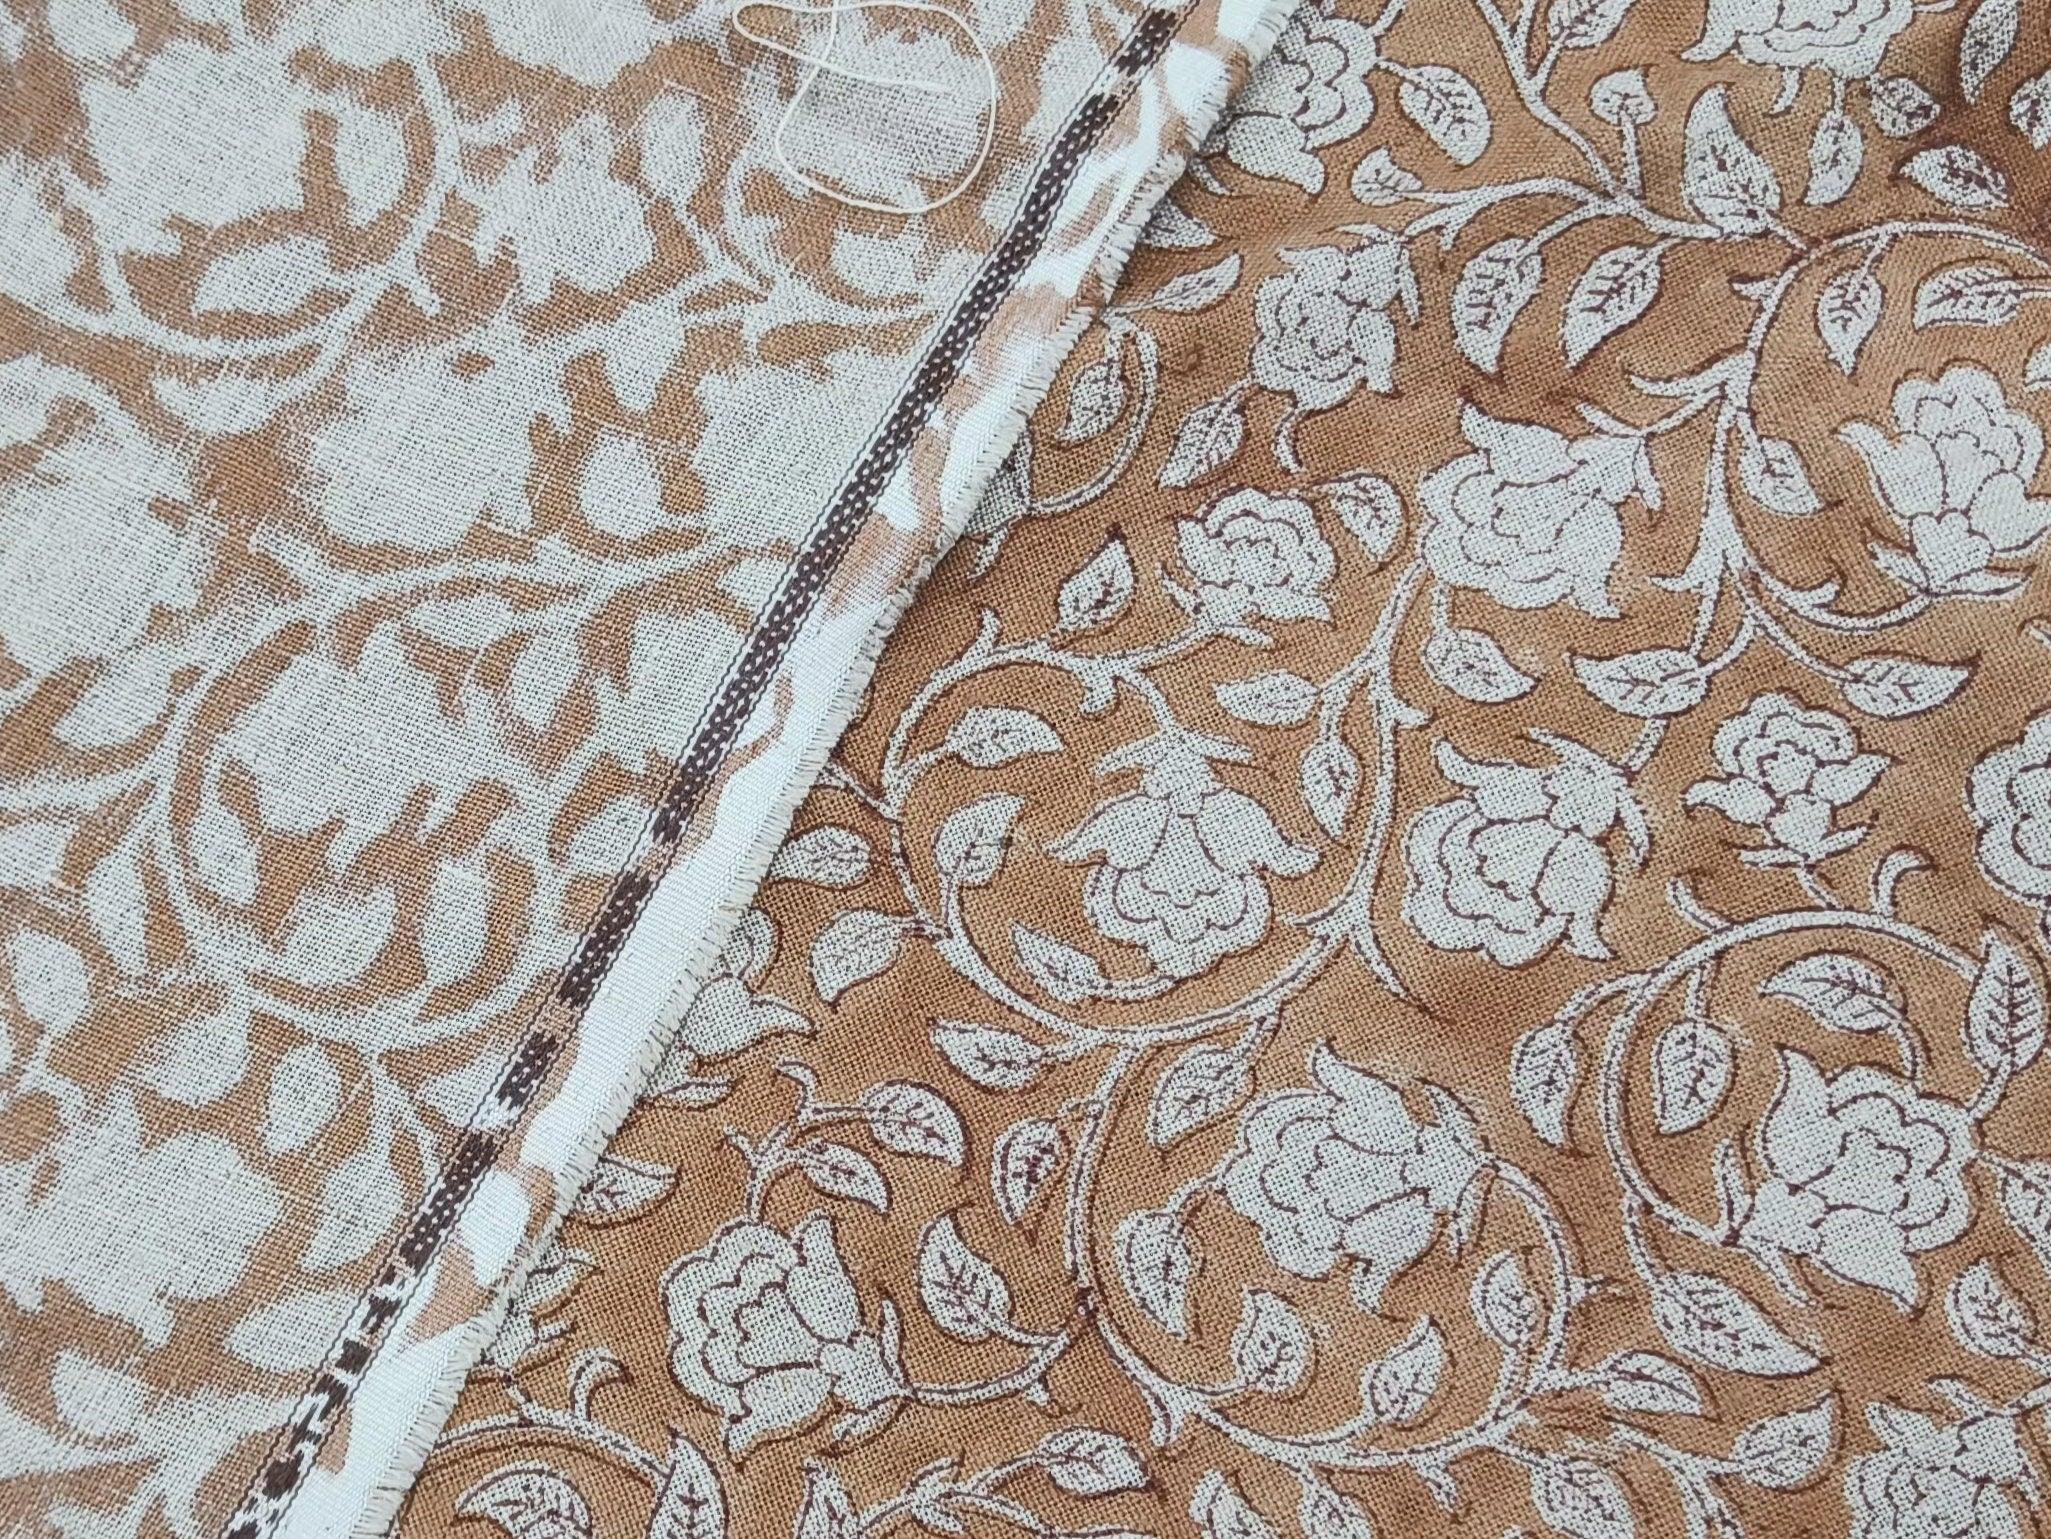 Amritvela Brown  Mini Floral Block Print  Indian Hand Block Print  Natural Pure Linen Fabric   Pillow,Cushion,Upholstery